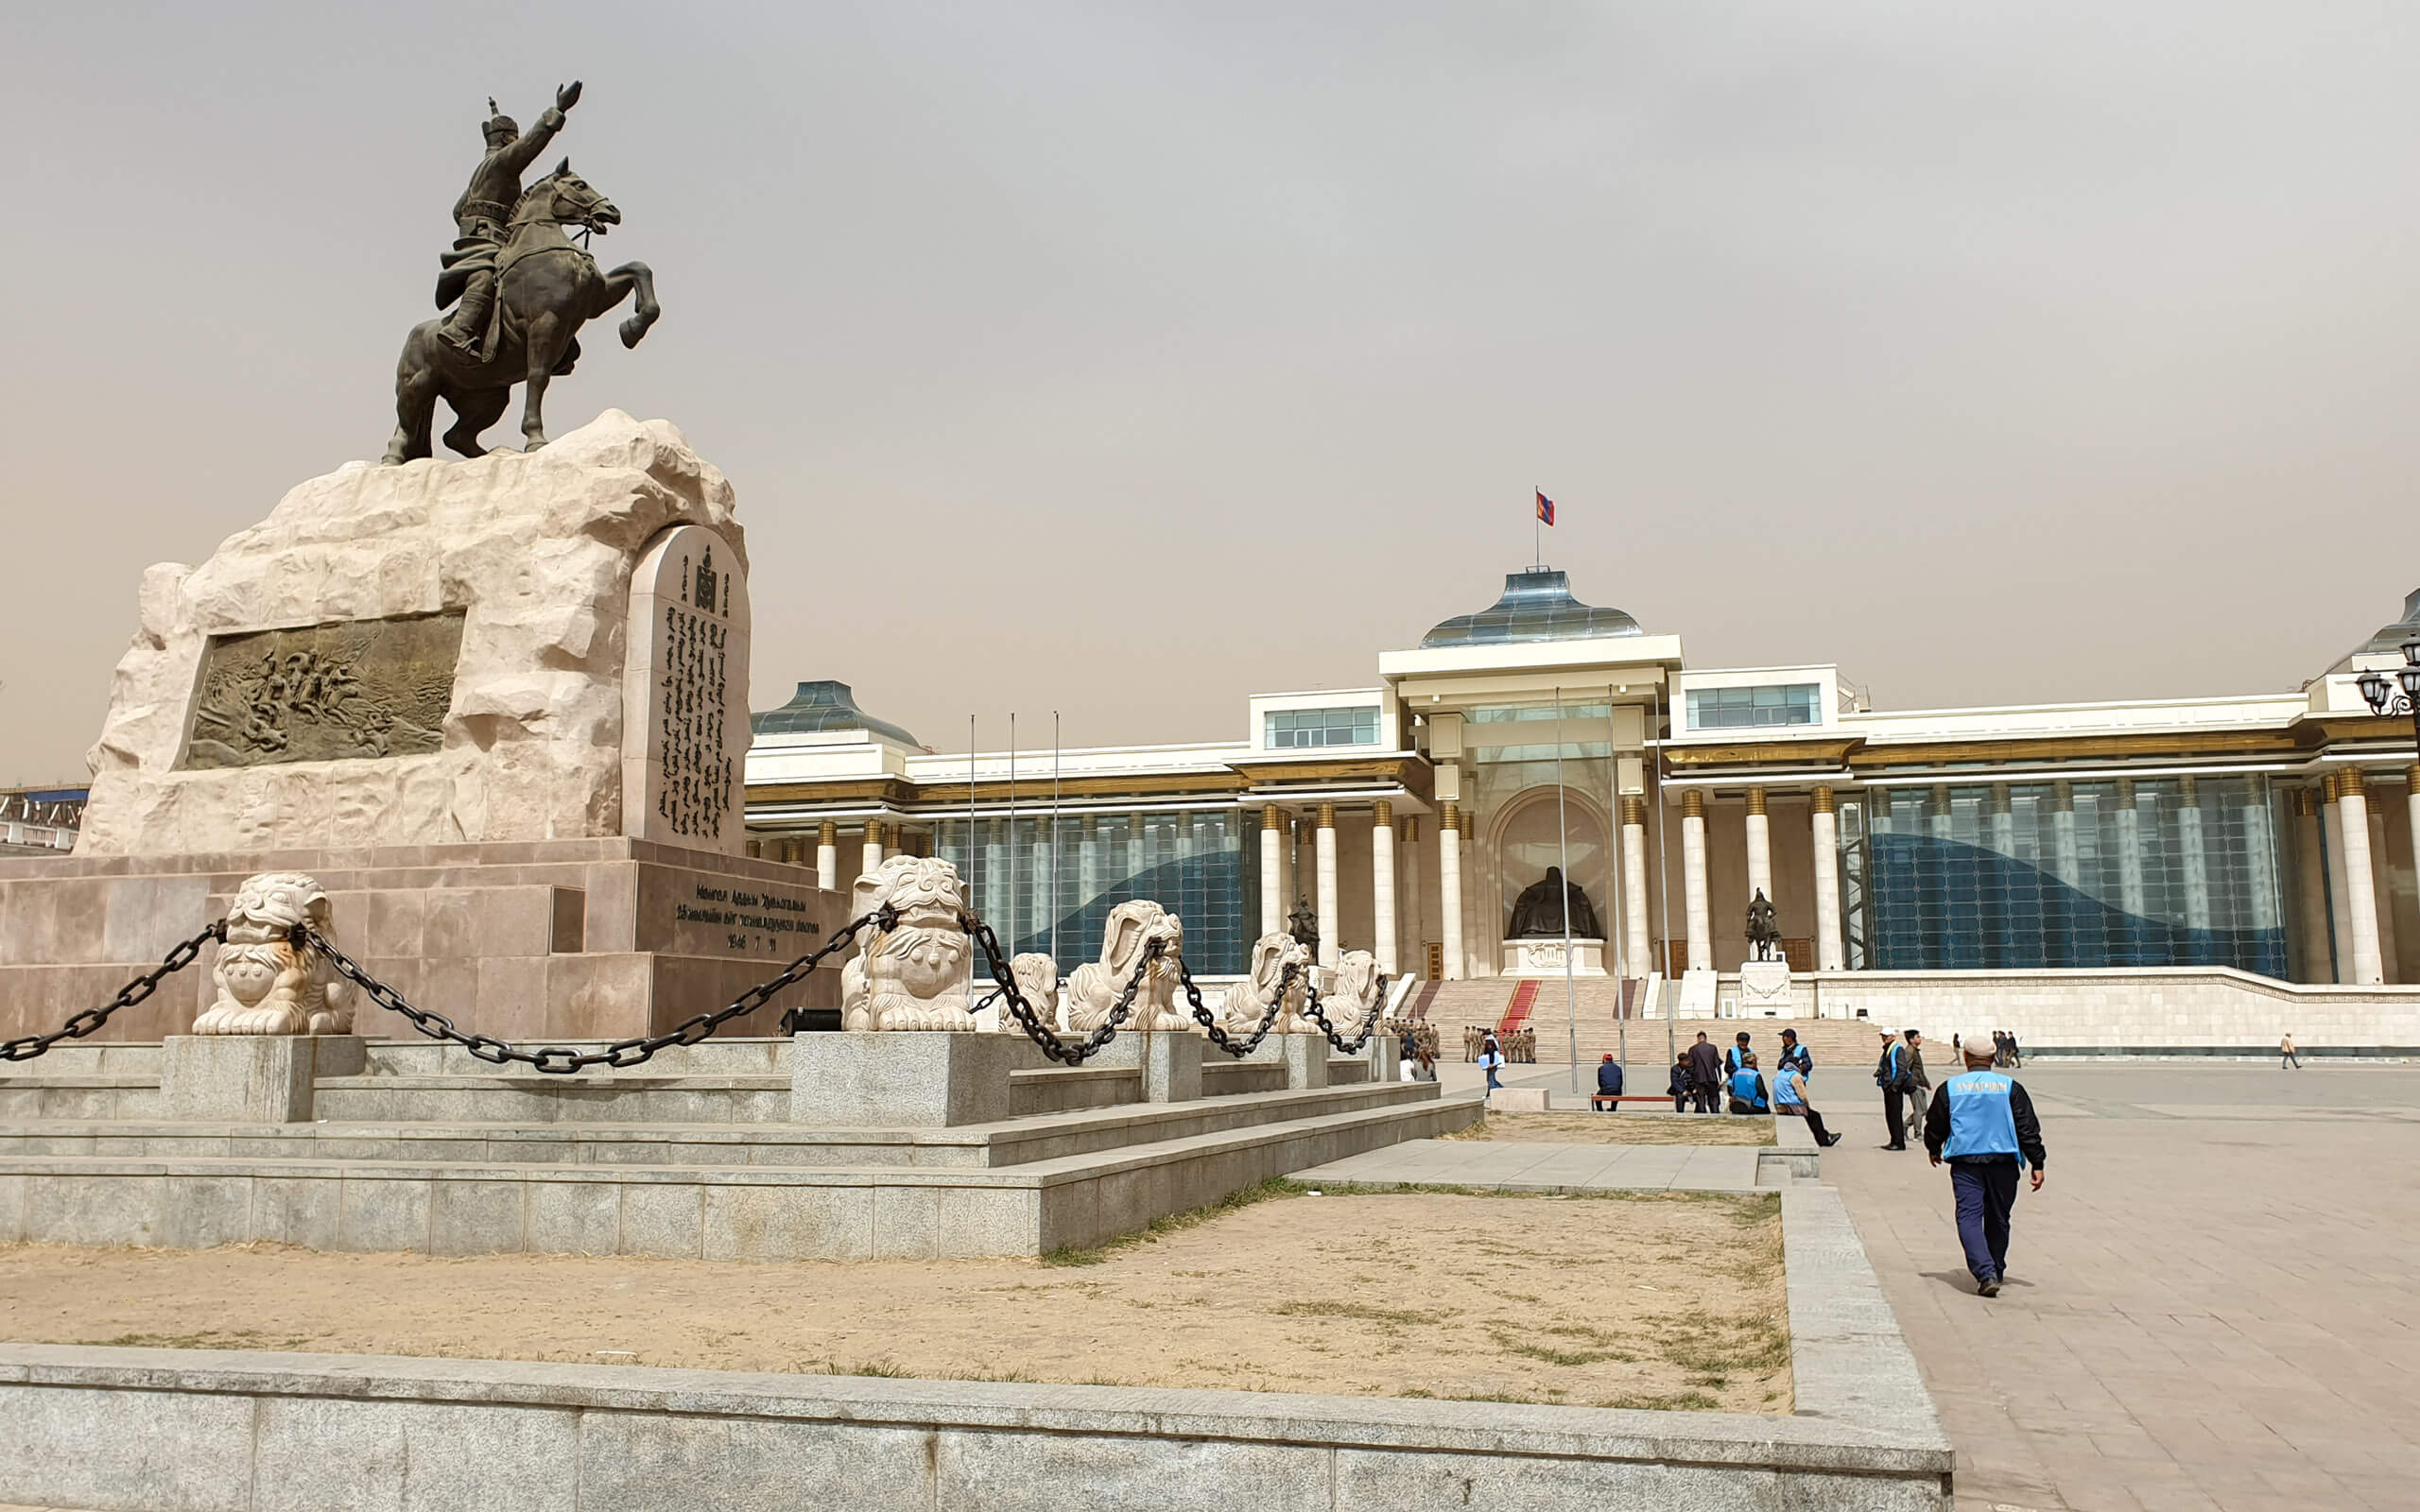 Ulaanbaatar's main square